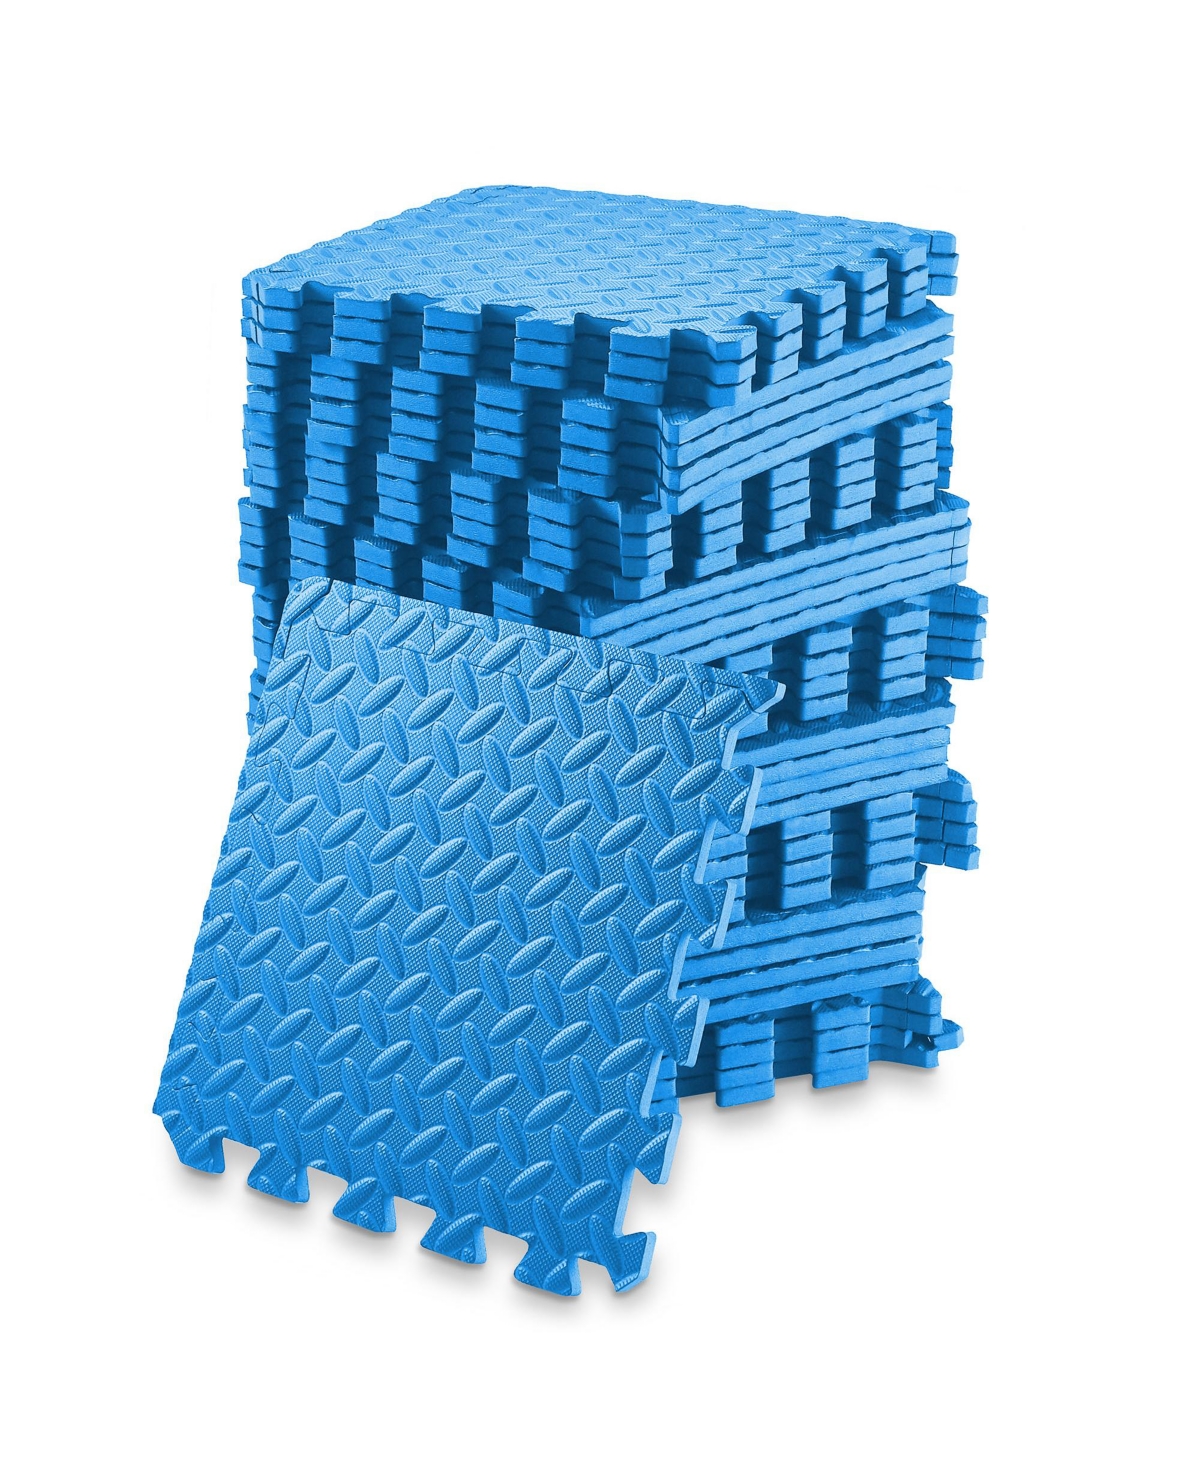 Pack of 36 Exercise Flooring Mats - 12 x 12 Inch Foam Rubber Interlocking Puzzle Floor Tiles - Blue - Blue